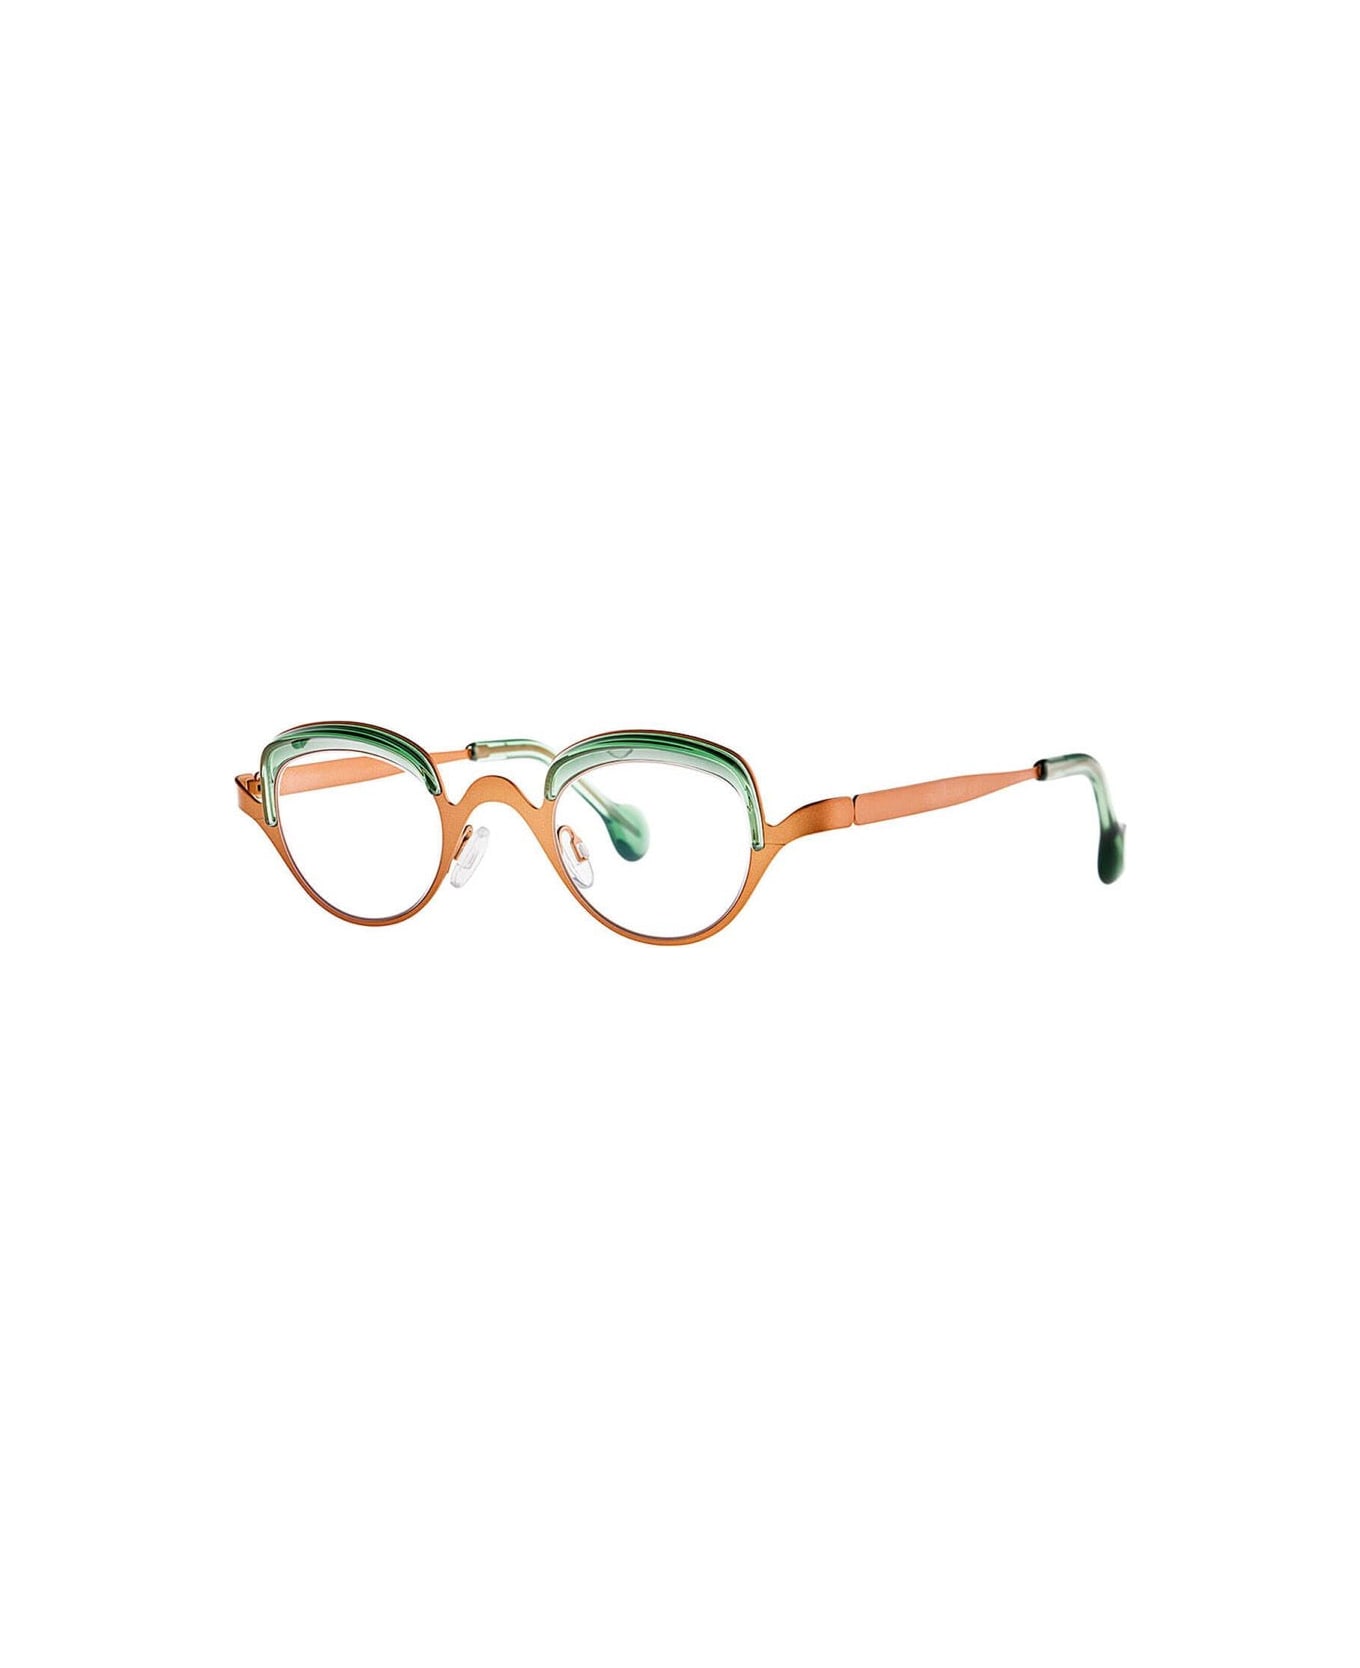 Theo Eyewear Iti 455 Glasses - Deep Rose アイウェア